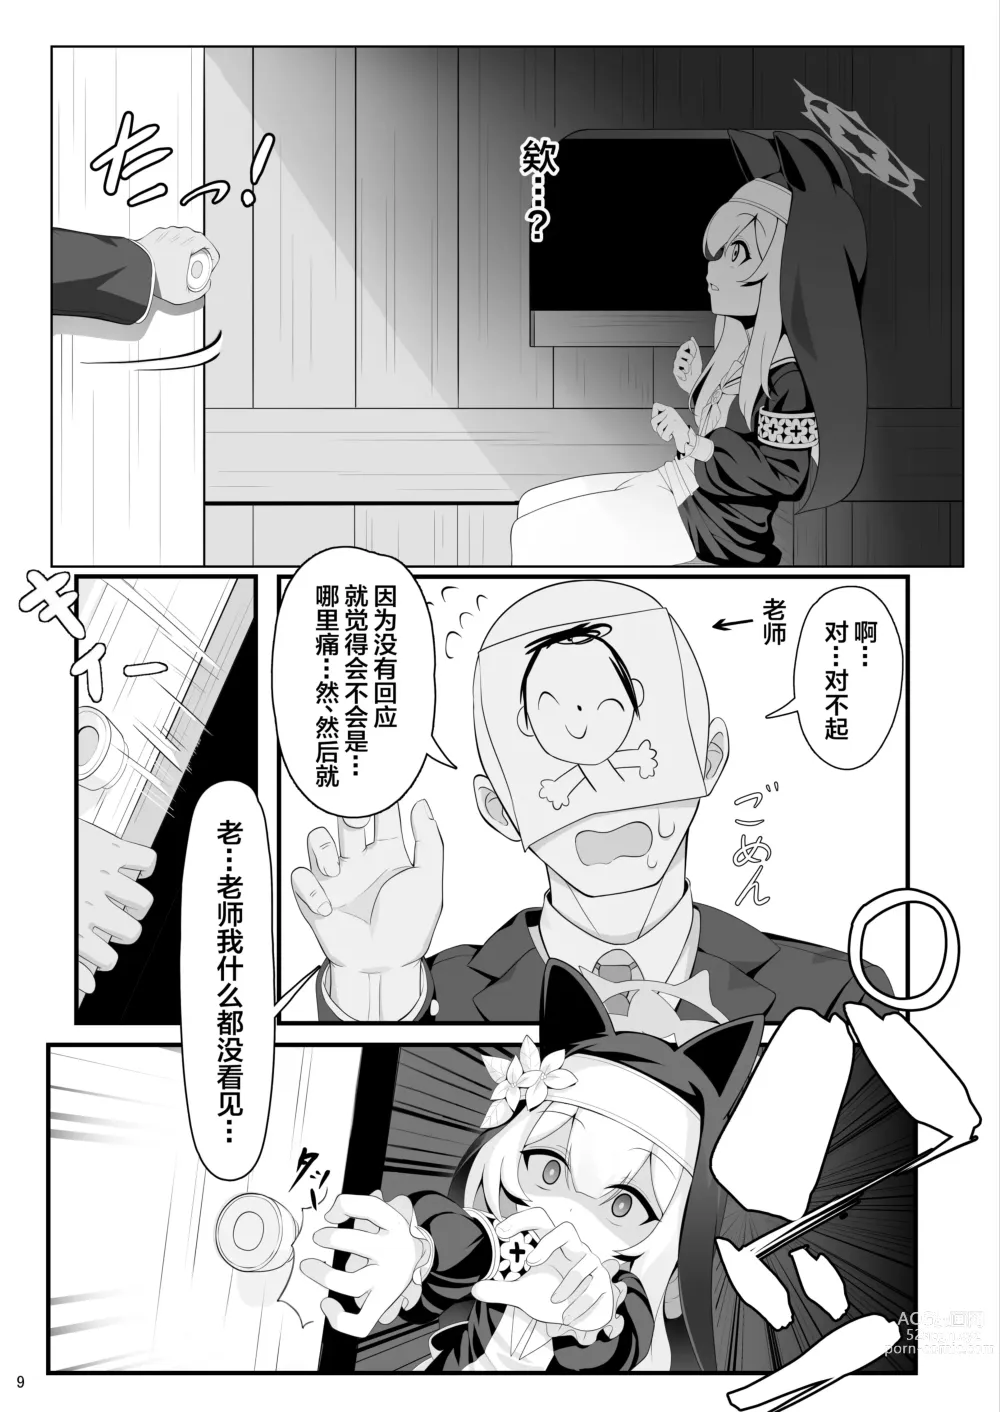 Page 10 of doujinshi Mari no Himitsu